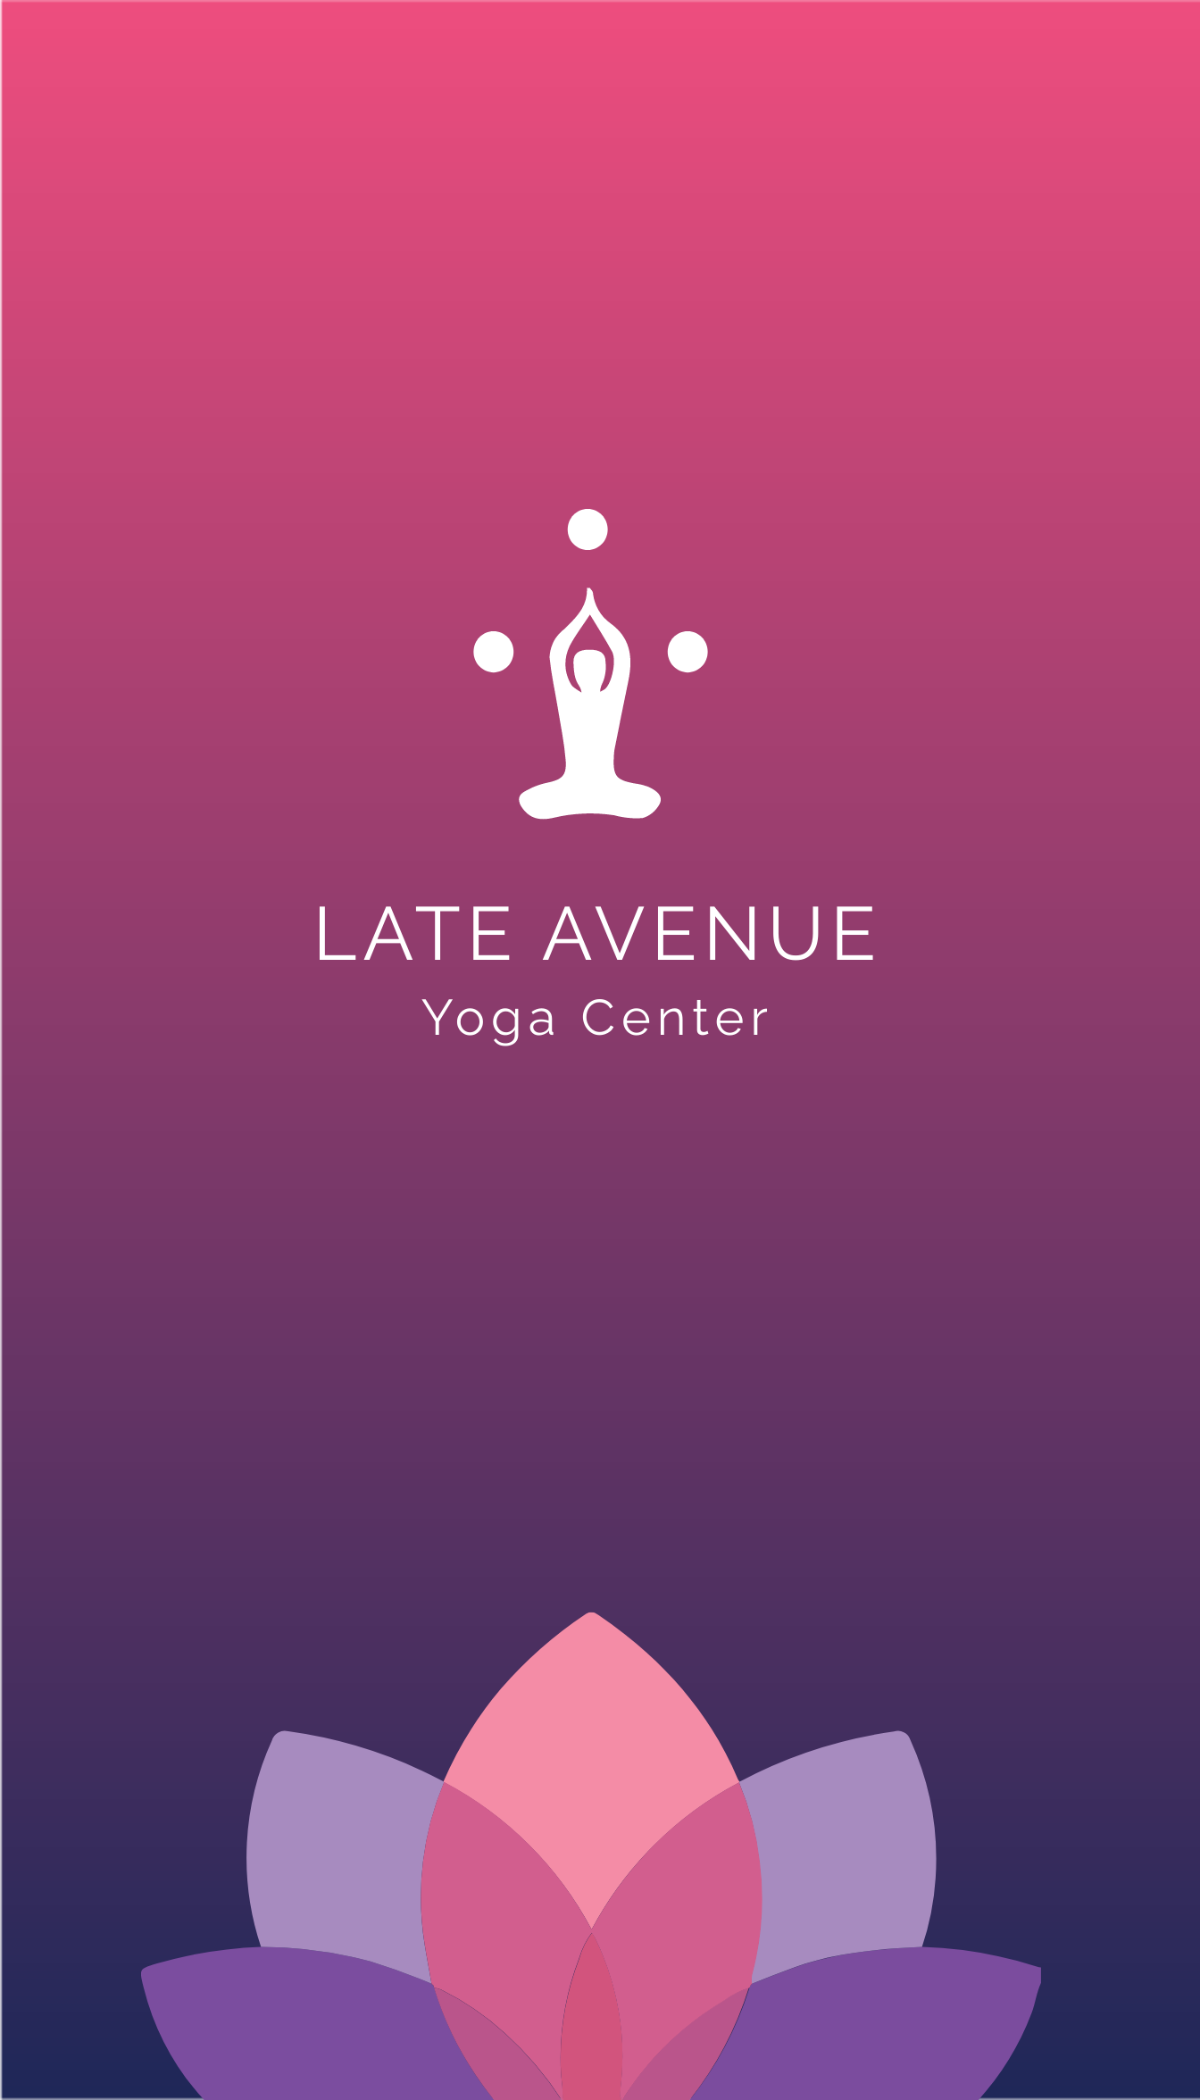 Yoga Center Business Card Template